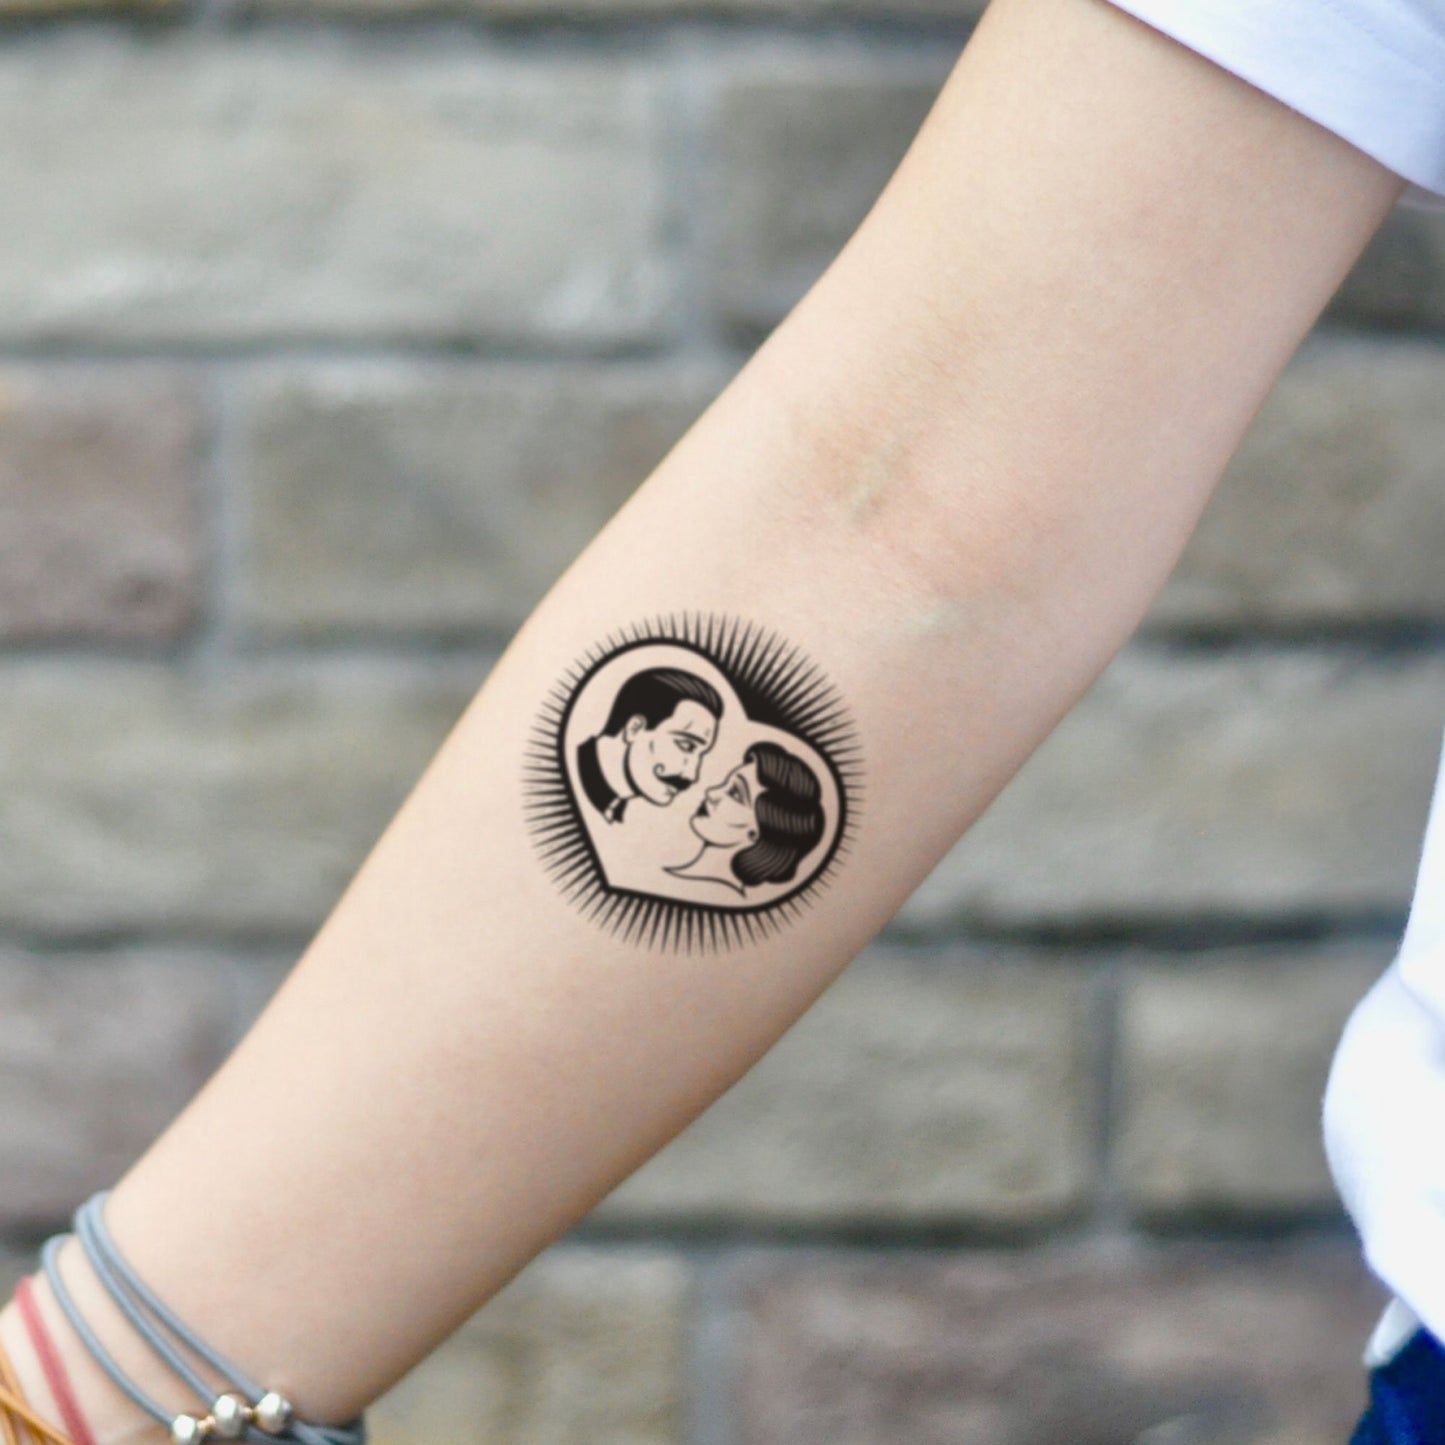 fake small man and woman illustrative temporary tattoo sticker design idea on inner arm